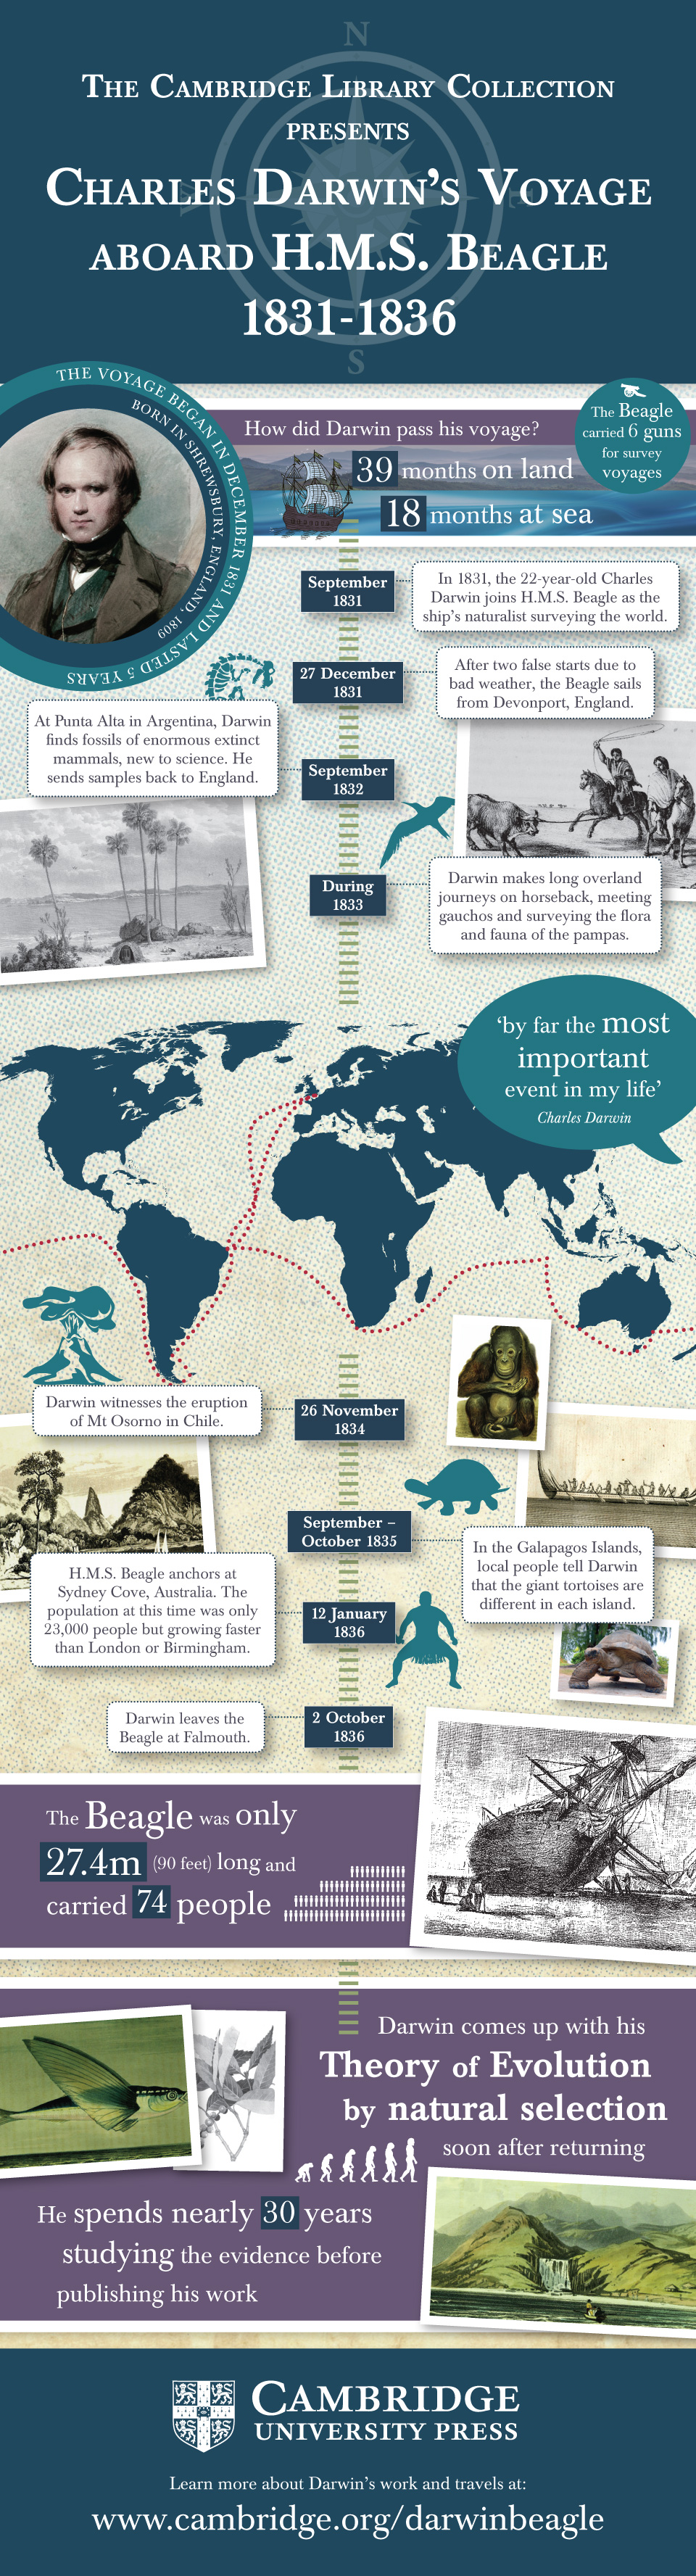 Infographic detailing Charles Darwin's voyage aboard HMS Beagle